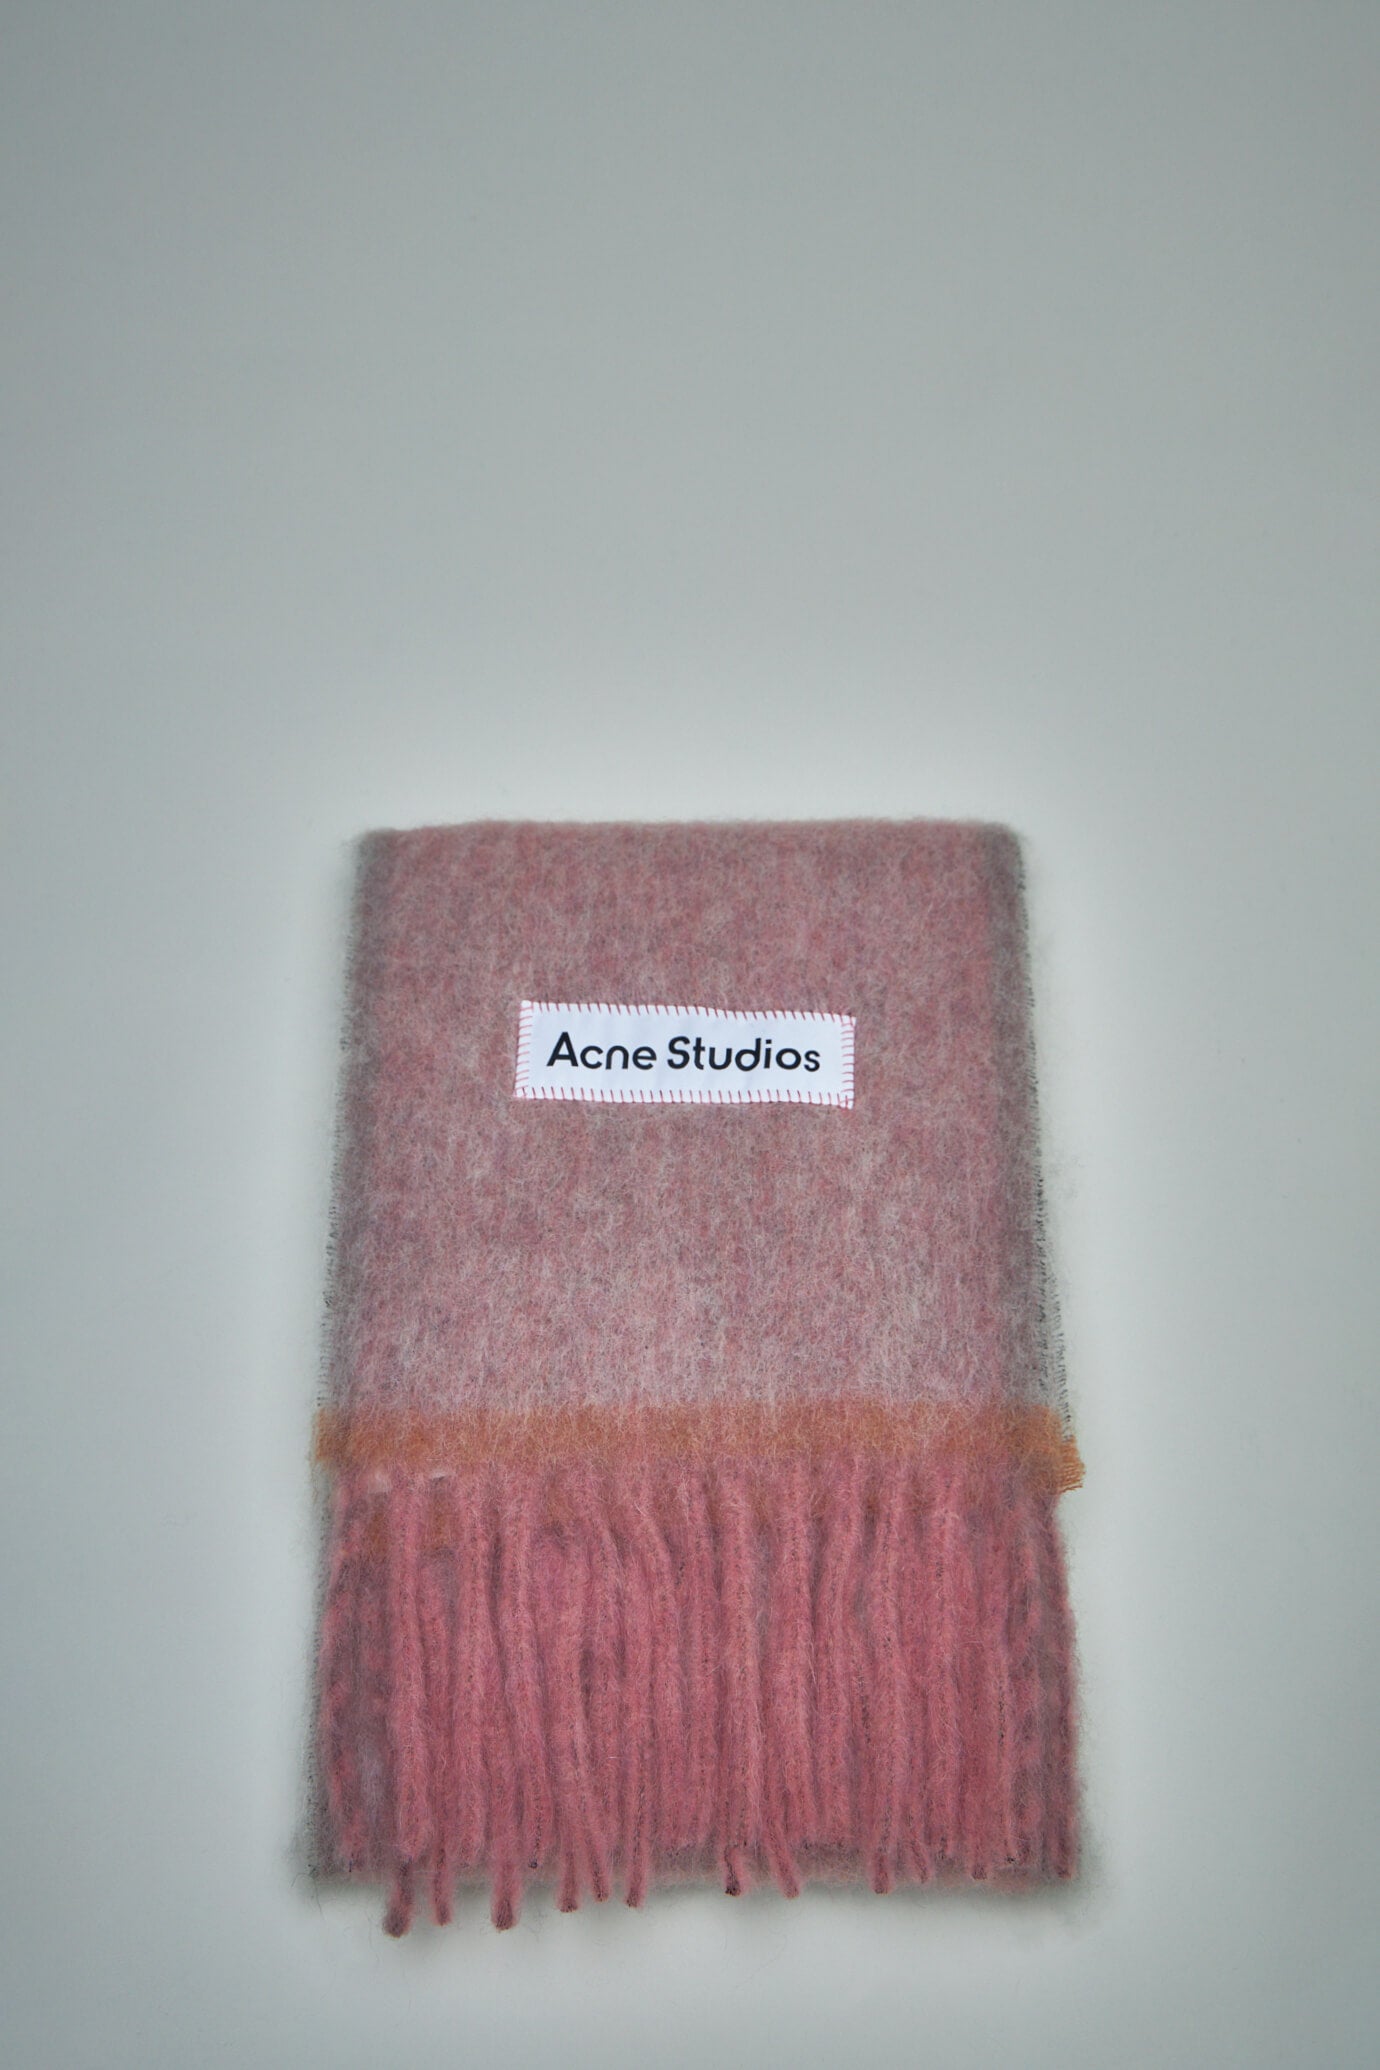 Acne Studios - Wool scarf pink label - Narrow - Powder blue